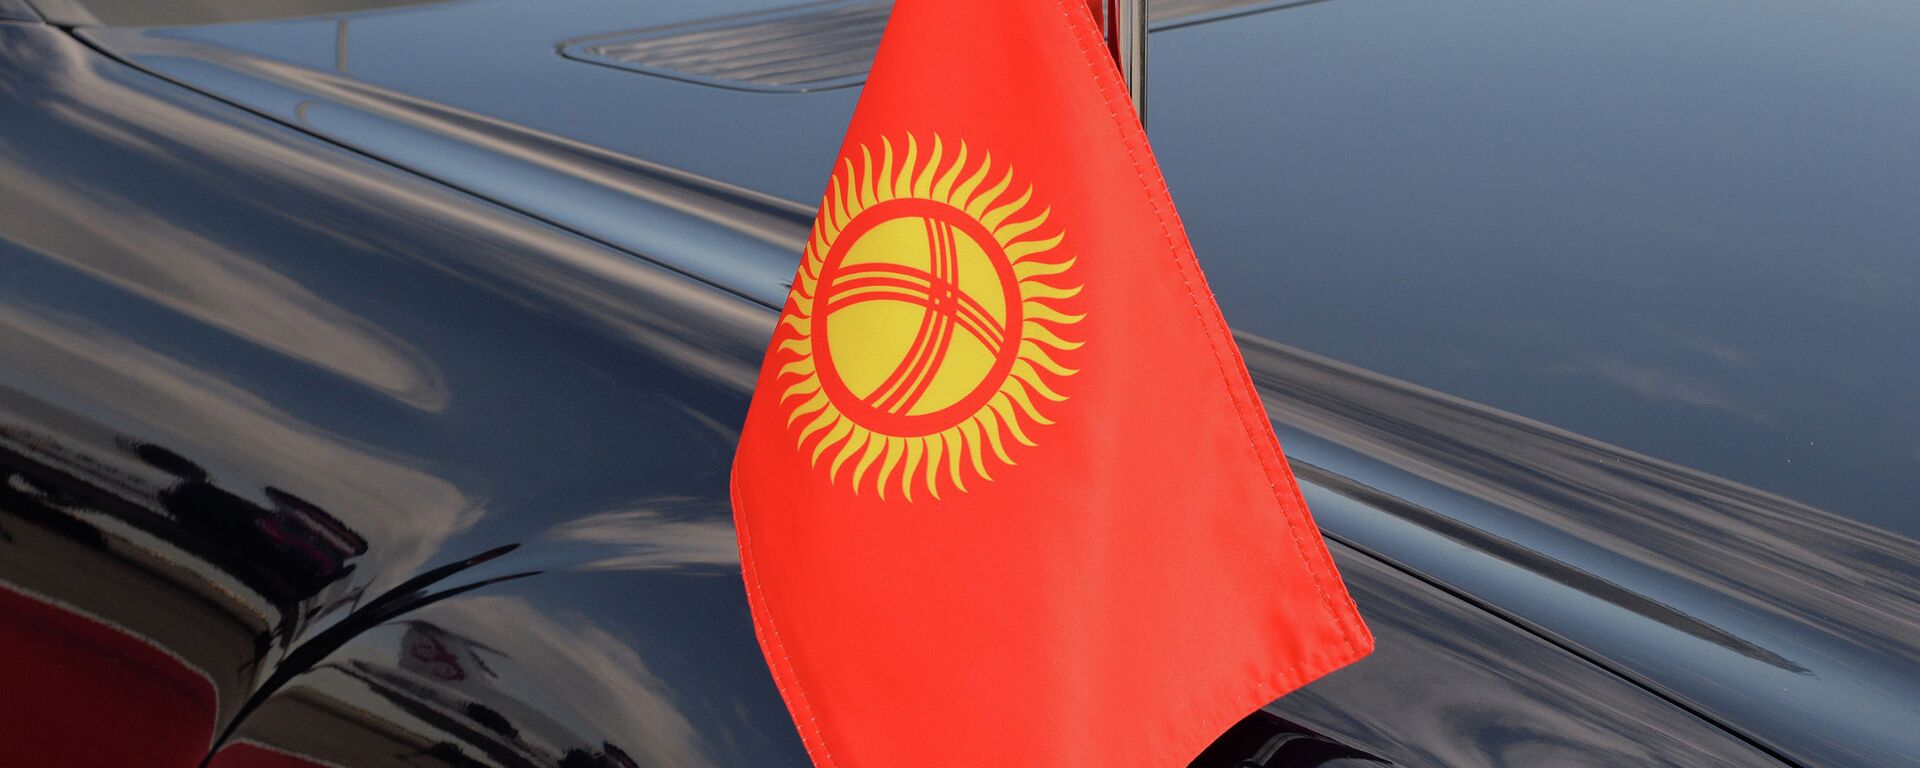 Флаг на автомобиле кортежа. Архивное фото - Sputnik Кыргызстан, 1920, 20.12.2021